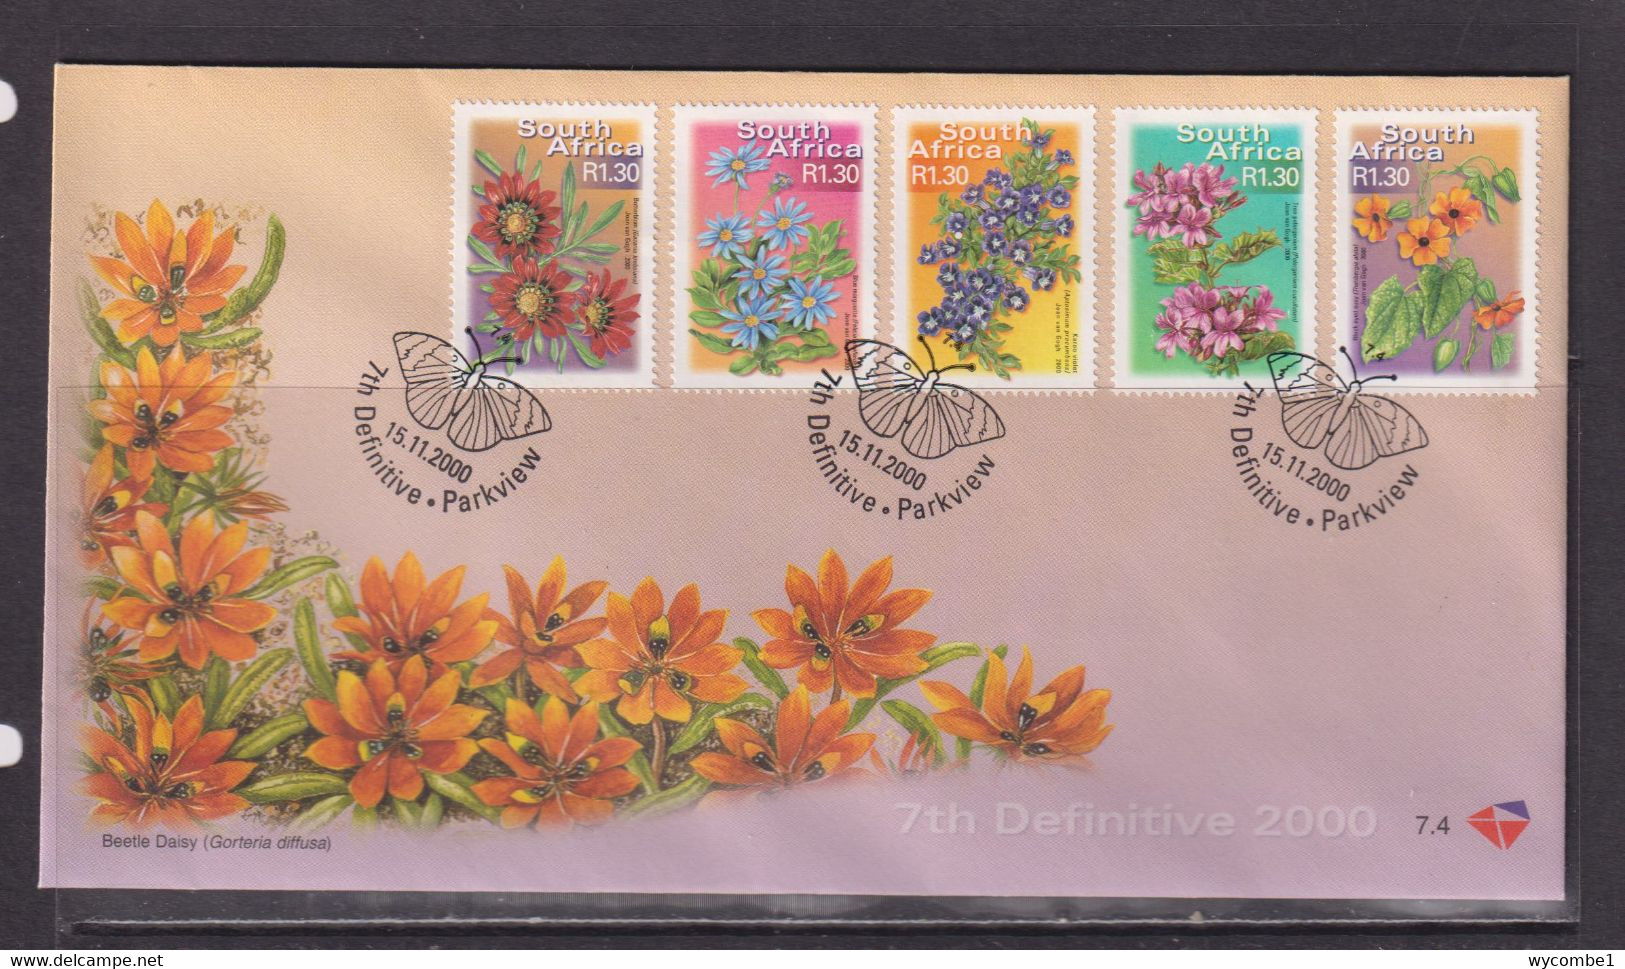 SOUTH AFRICA - 2000 Flowers 1r30 Definitive FDC - Briefe U. Dokumente